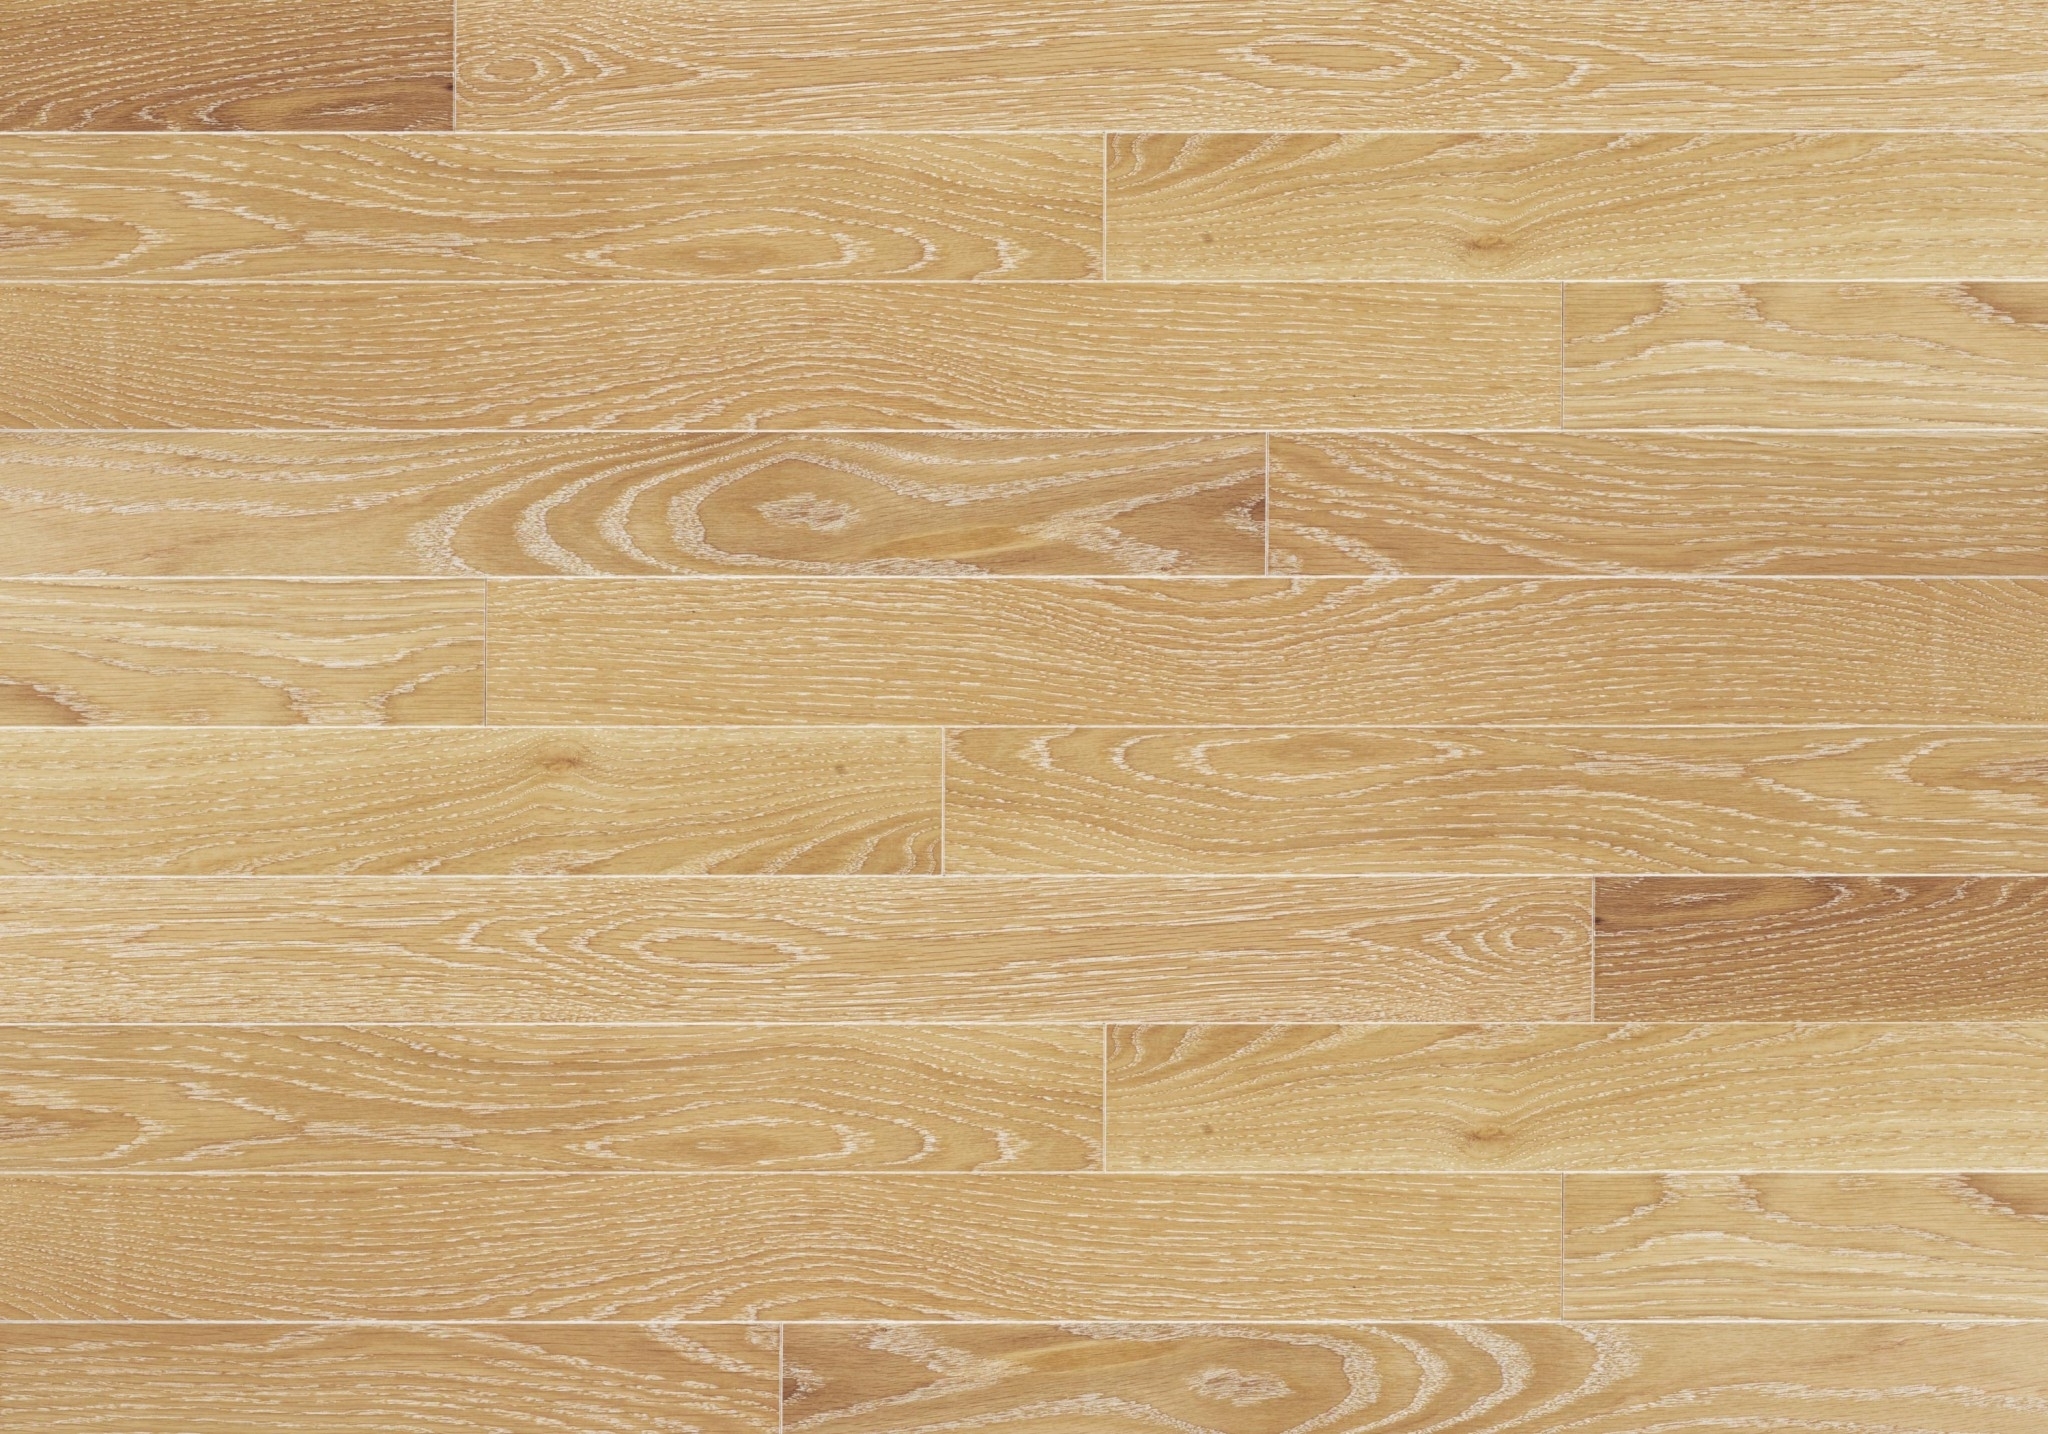 Craftsman Hardwood Floor Designs